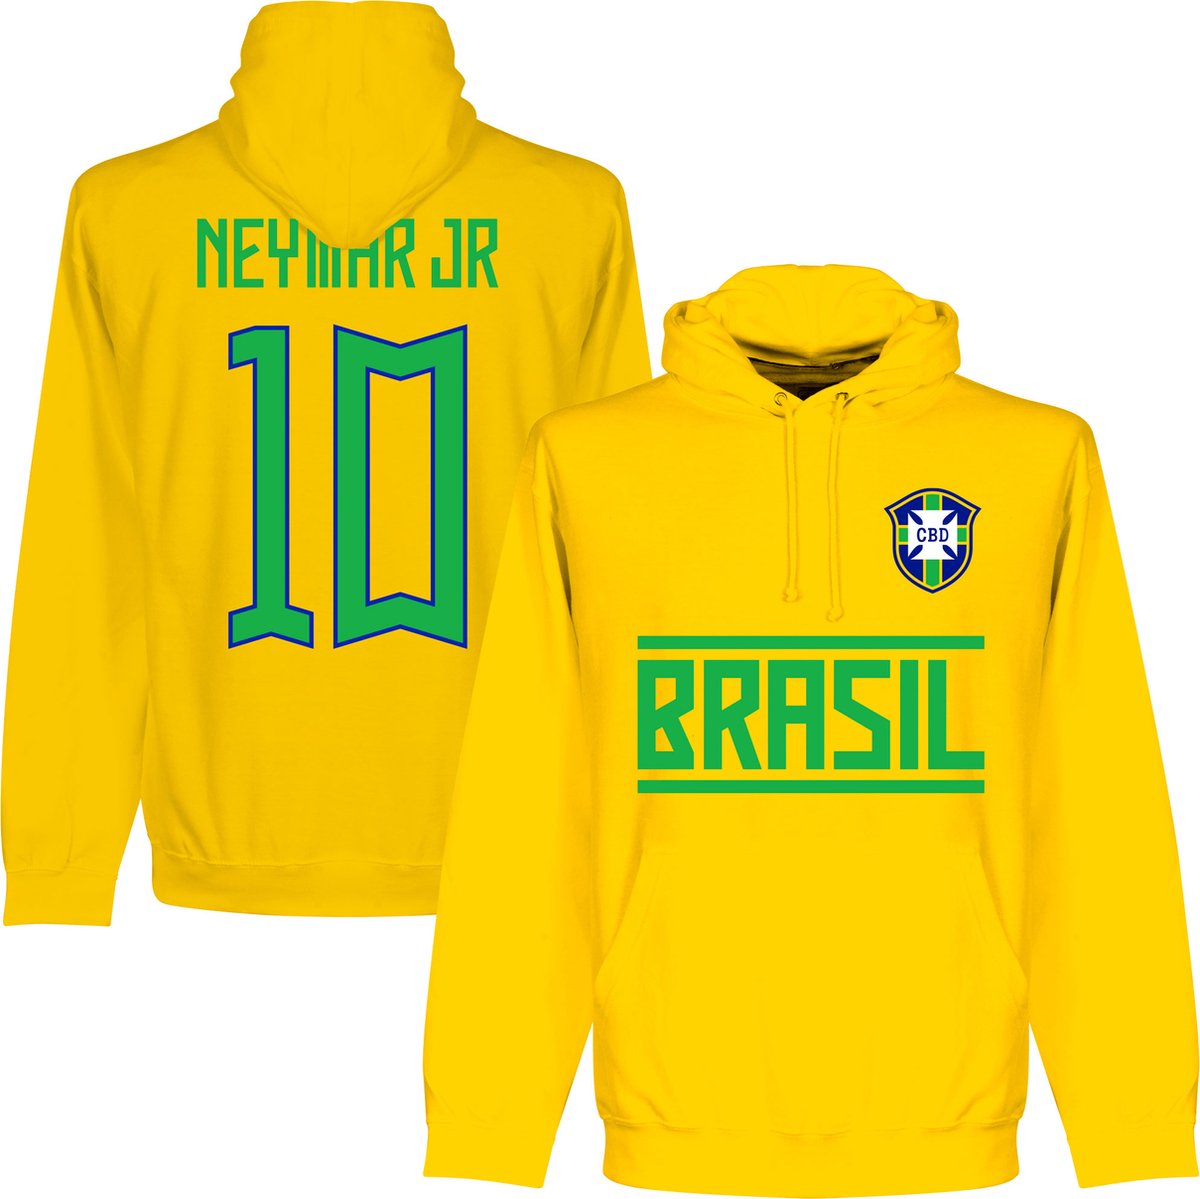  AteeCP Kid Neymar Fleece Hoodies and Sweatpants Suit